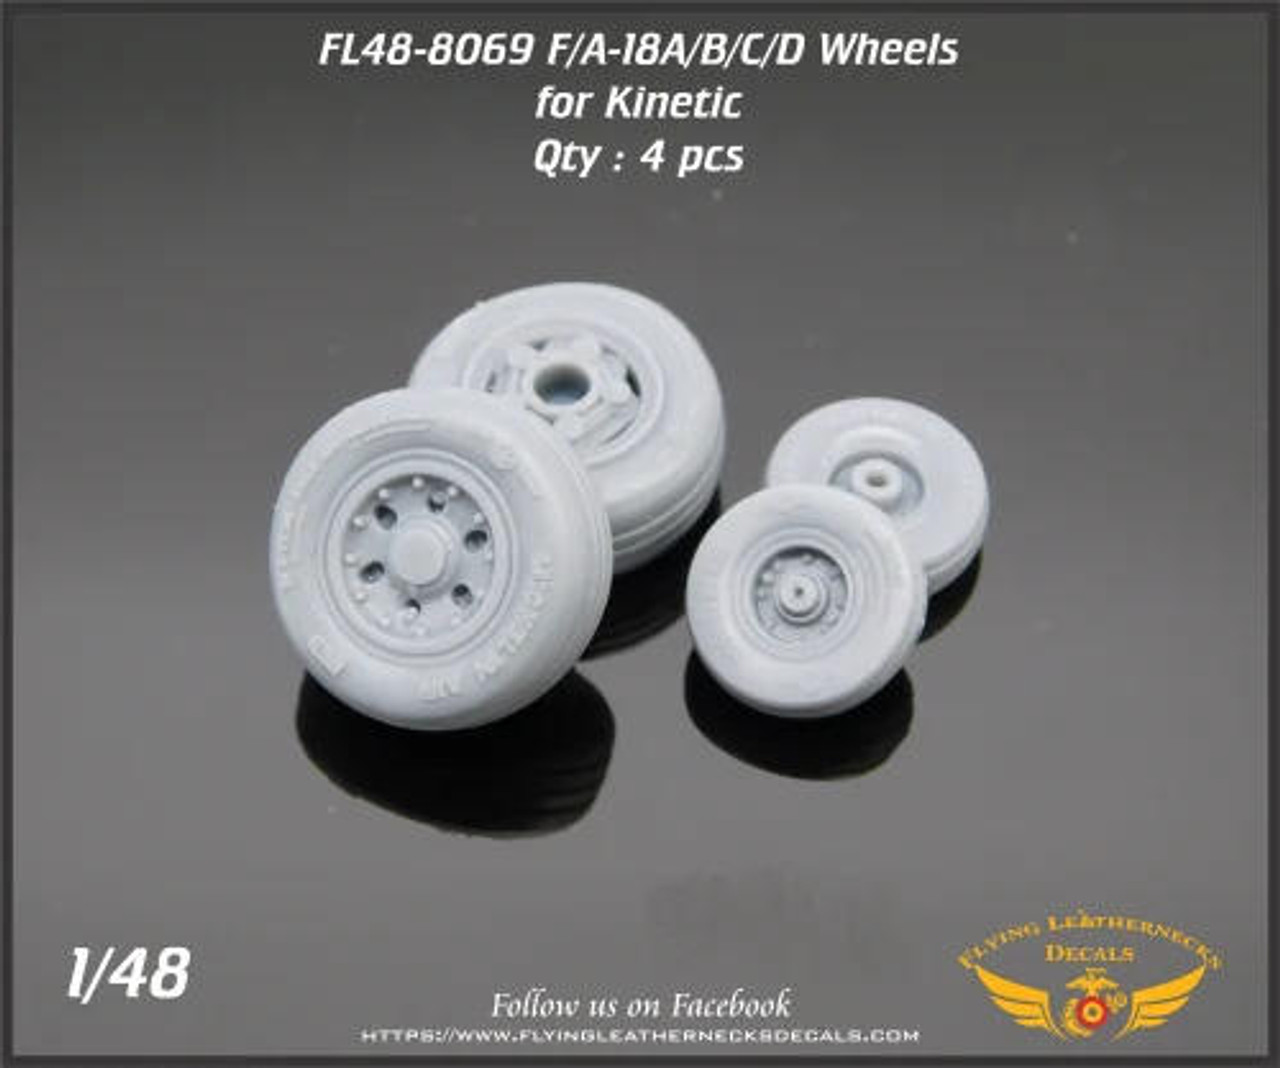 FLN-48-8069 1/48 Flying Leathernecks F/A-18A/B/C/D Wheels - Kinetic MMD Squadron